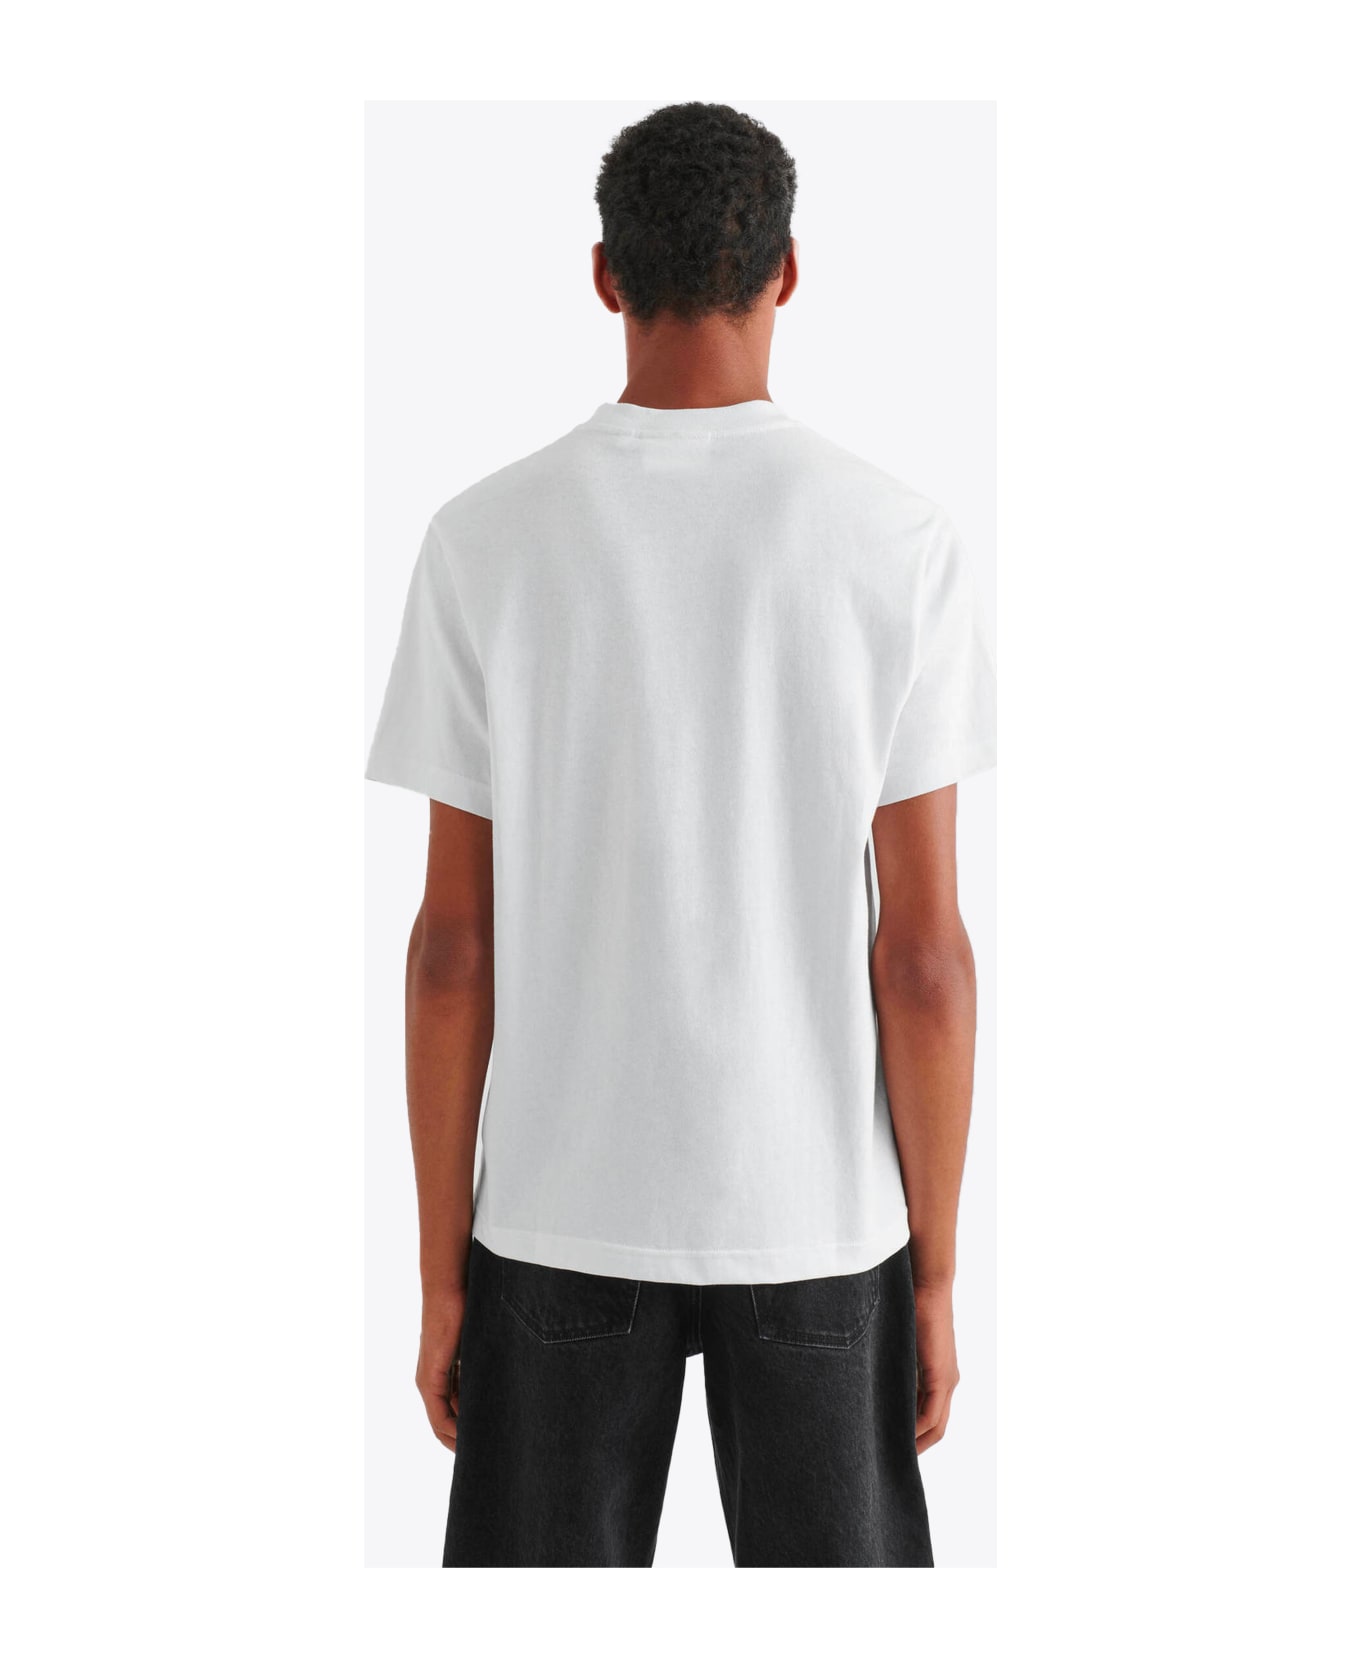 Axel Arigato Legacy T-shirt White cotton t-shirt with chest logo - Legacy t-shirt - Bianco